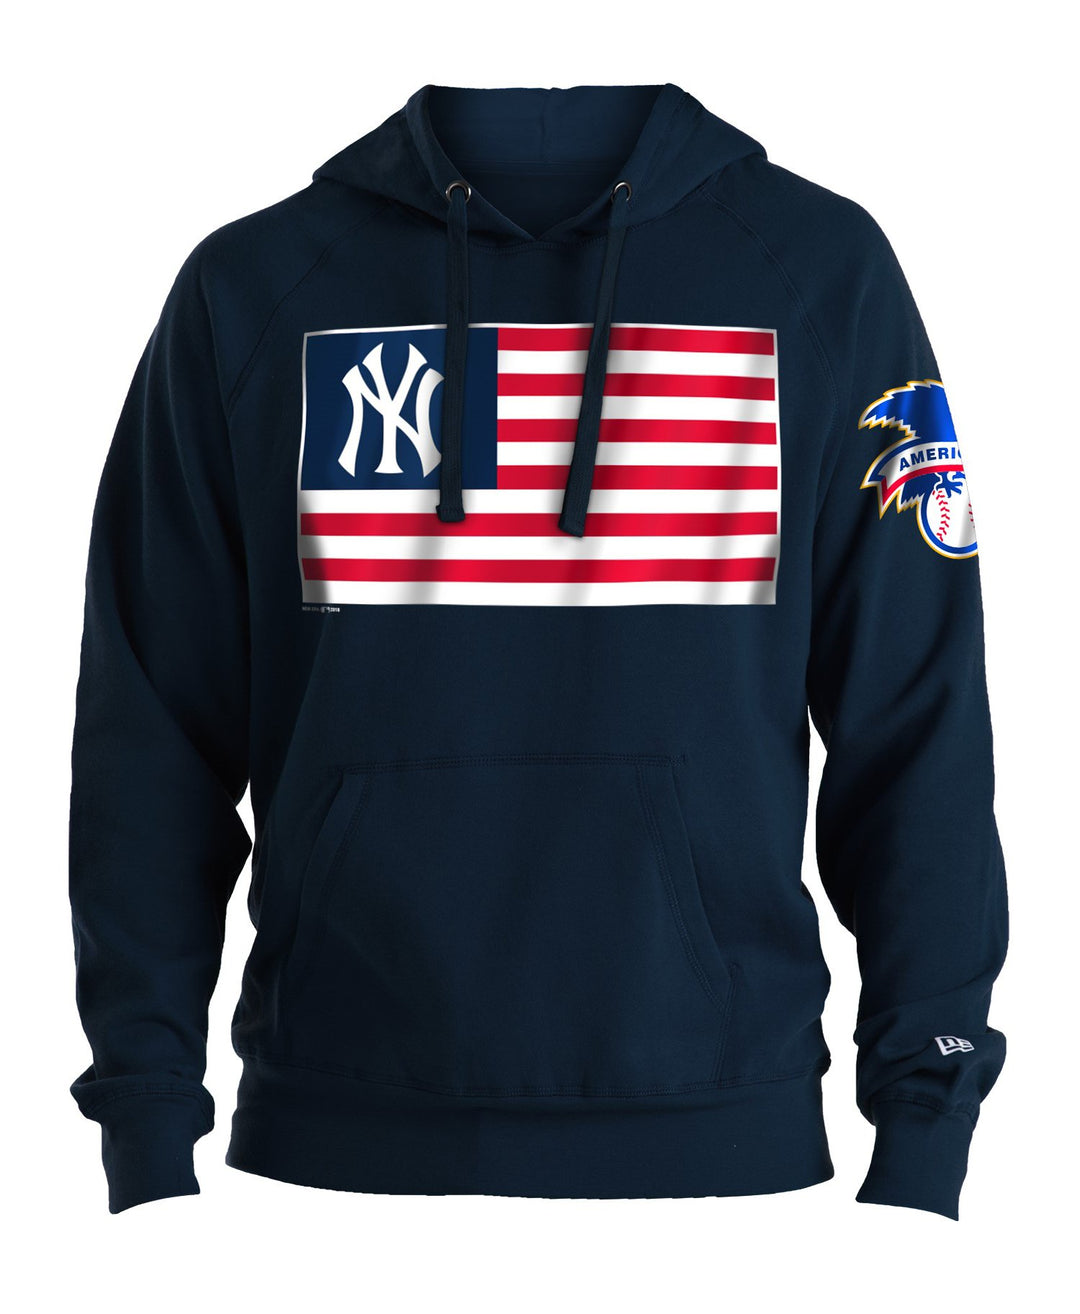 New York Yankees Flag by New Era - Navy